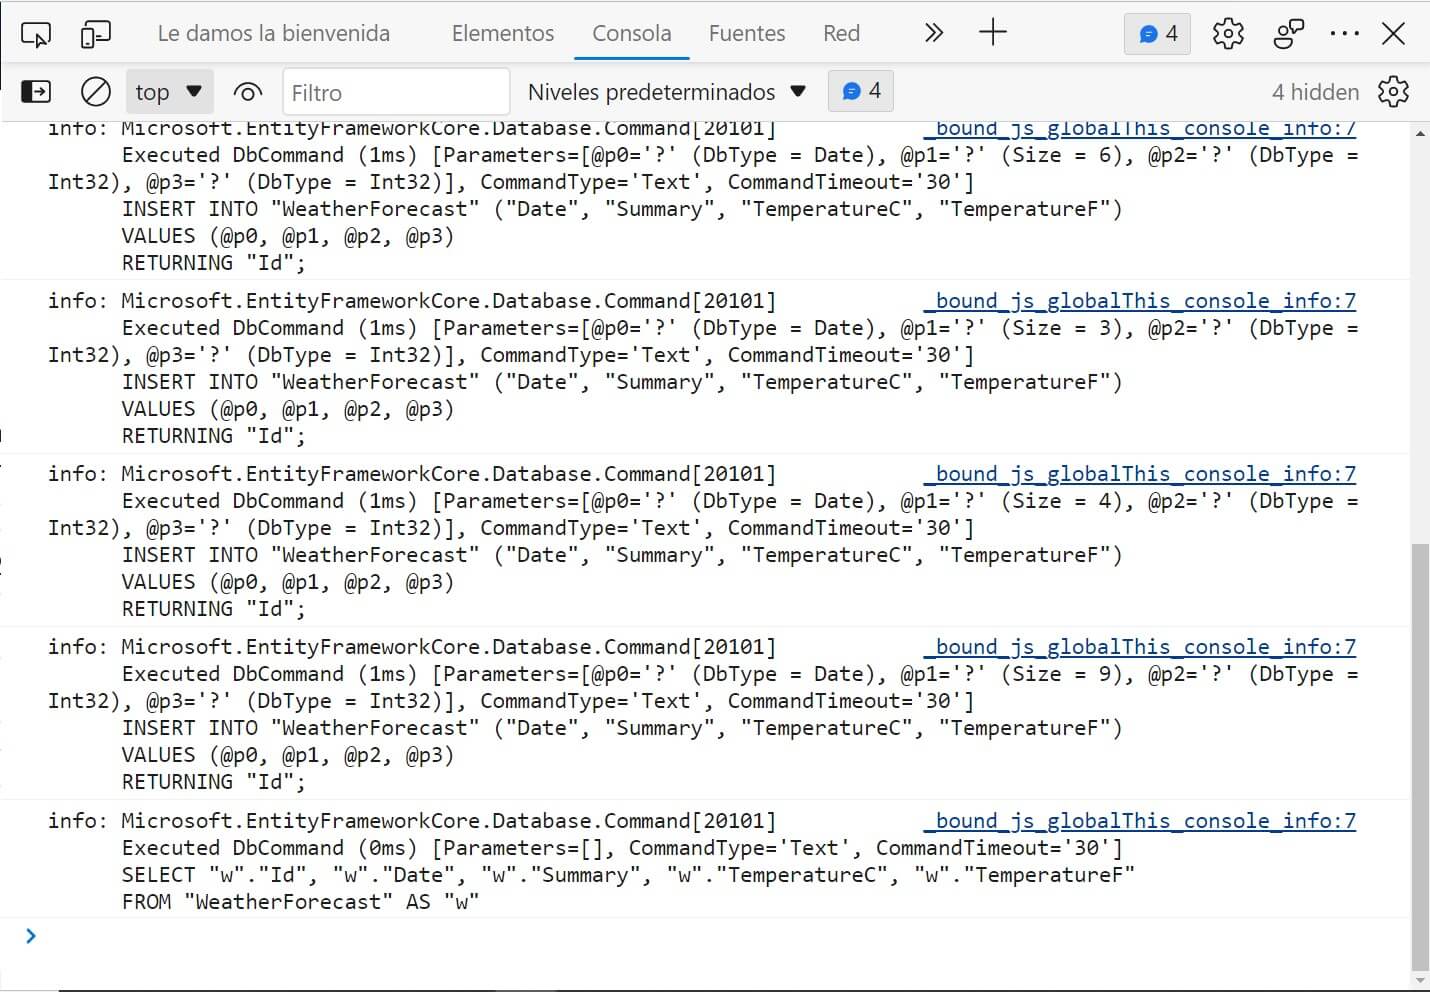 SQL en la consola del navegador al utilizar Entity Framework con Blazor WebAssembly